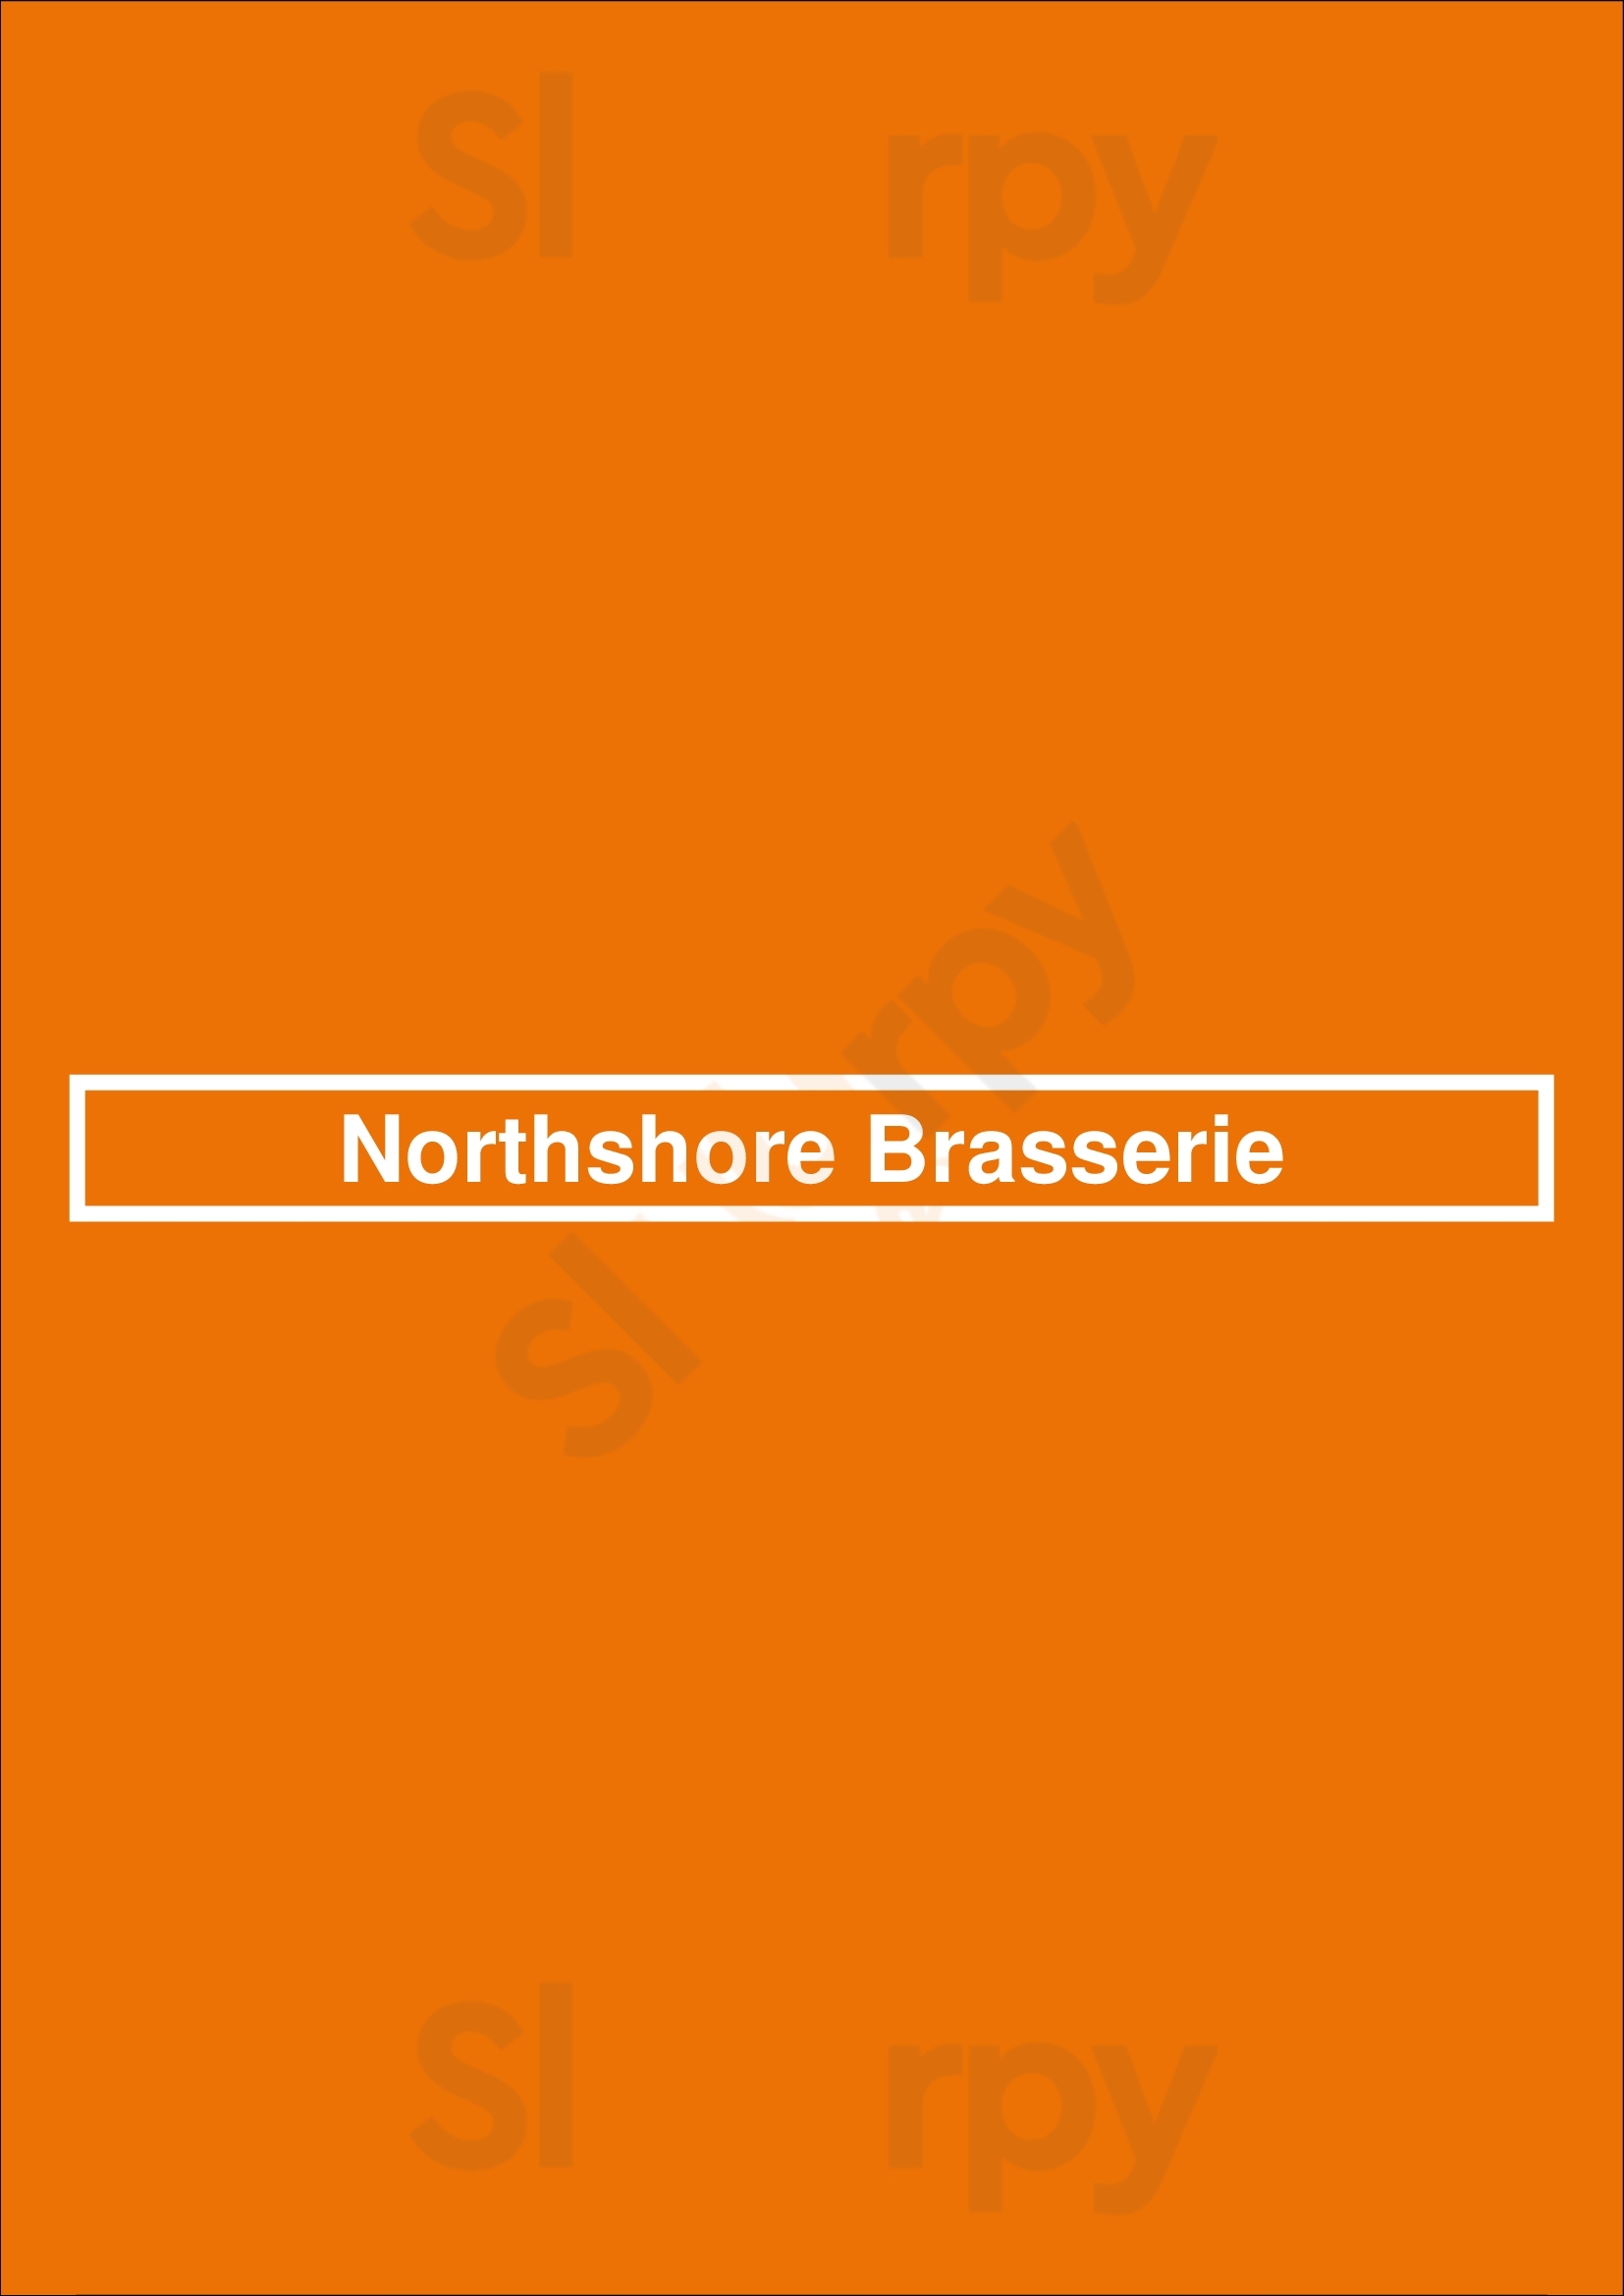 Northshore Brasserie Knoxville Menu - 1